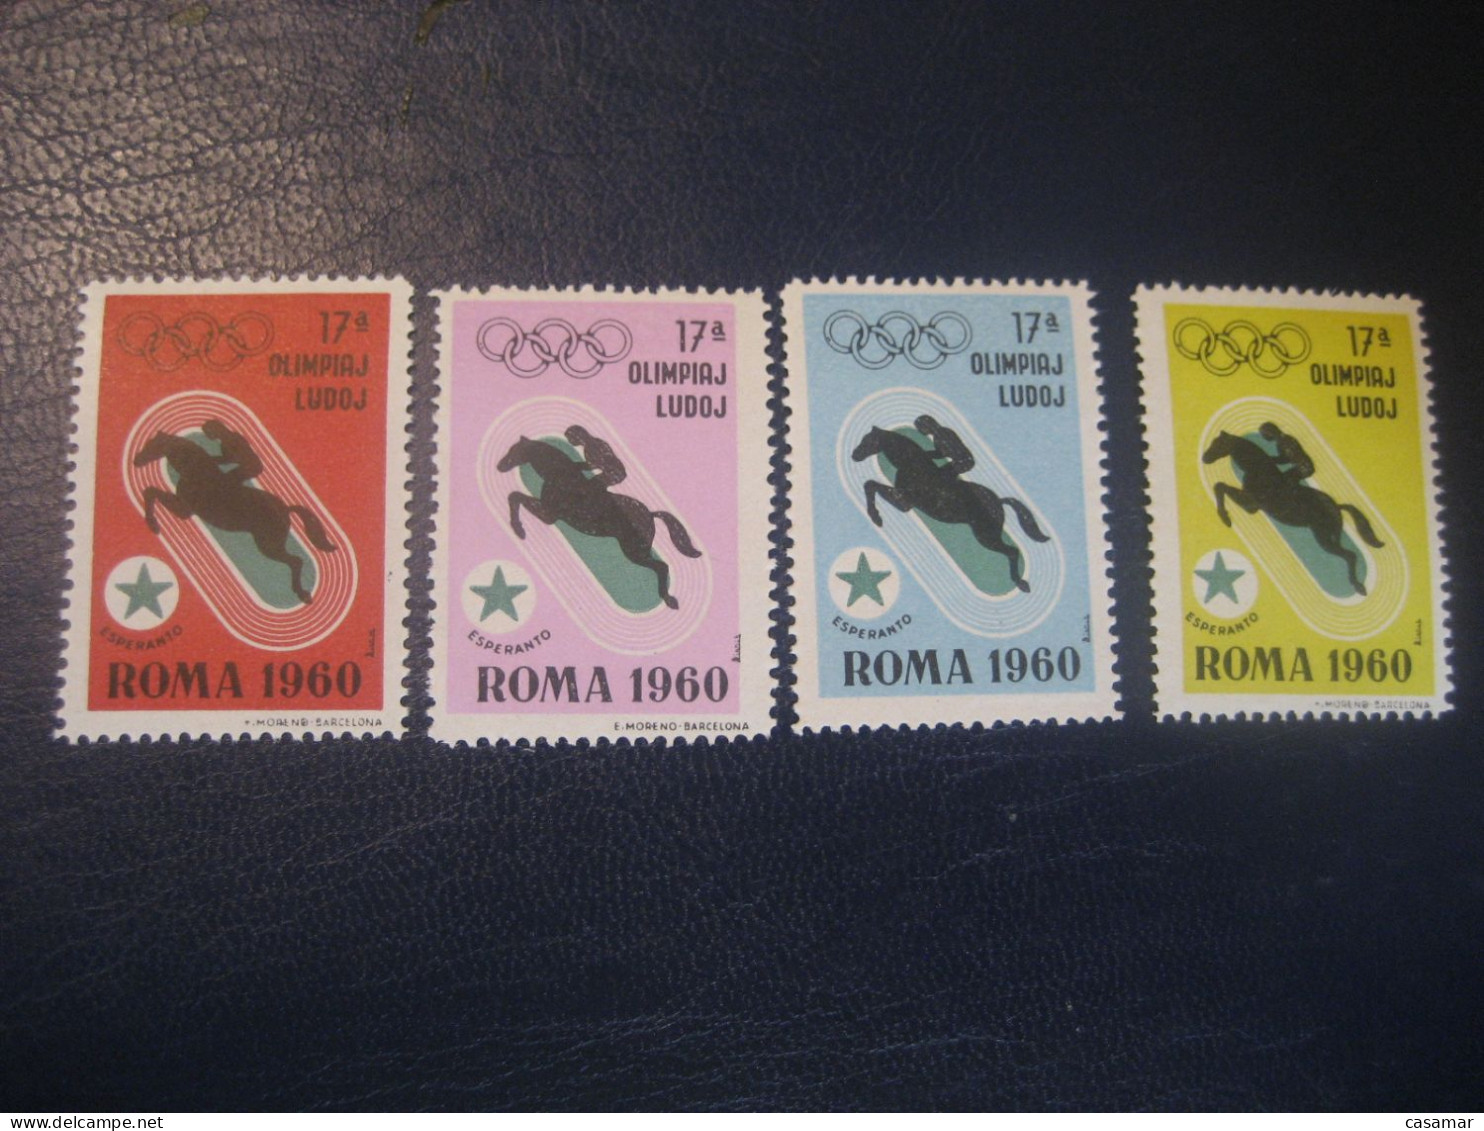 ROMA 1960 Equestrian Equitation Horse Olympic Games Olympics Esperanto 4 Poster Stamp Vignette ITALY Spain Label - Hippisme